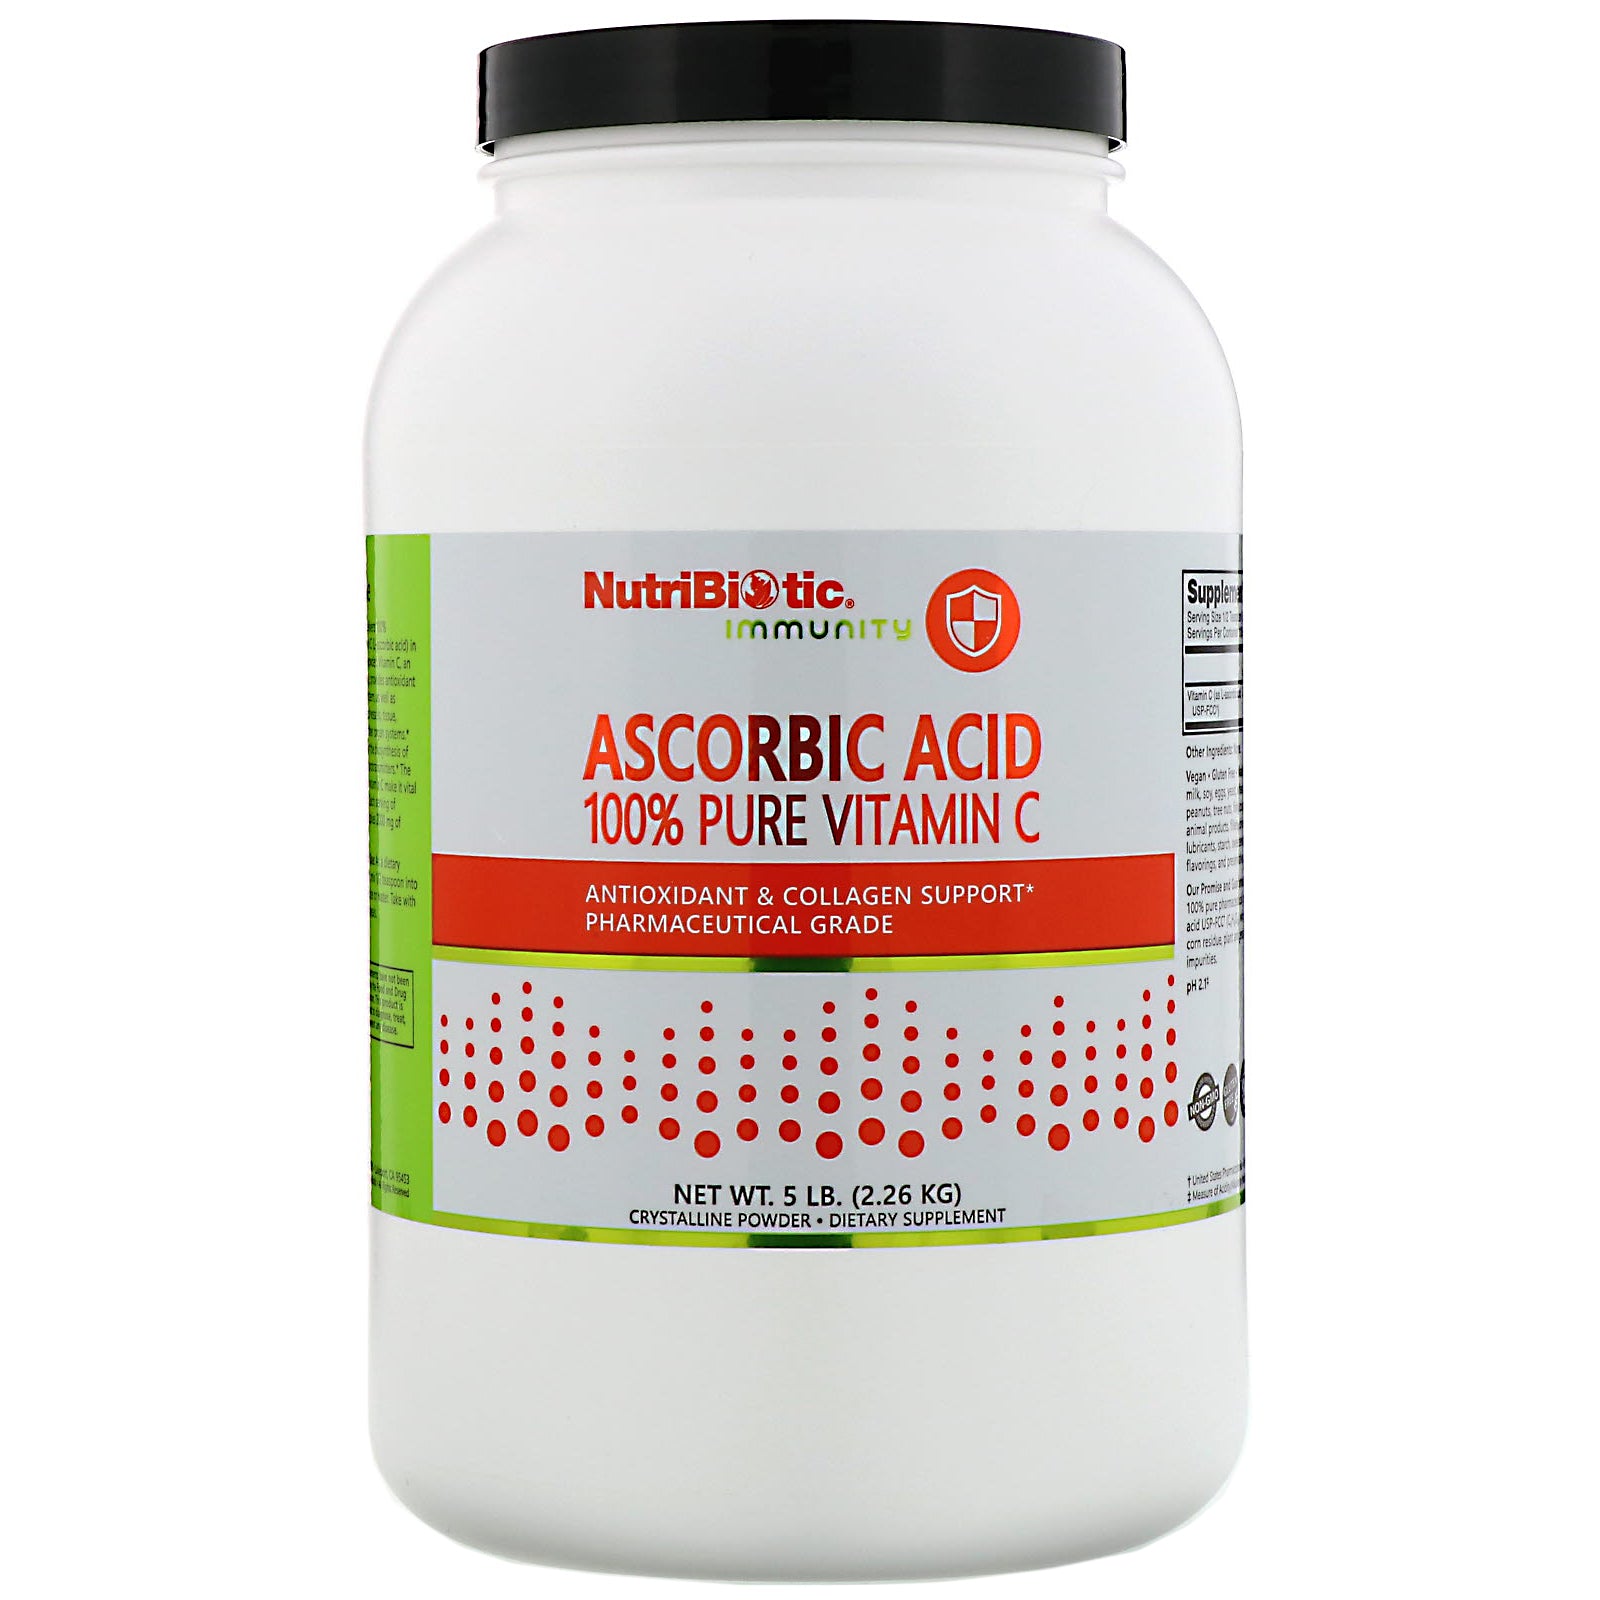 NutriBiotic, Immunity, Ascorbic Acid, 100% Pure Vitamin C, Crystalline Powder, 5 lb (2.26 kg)